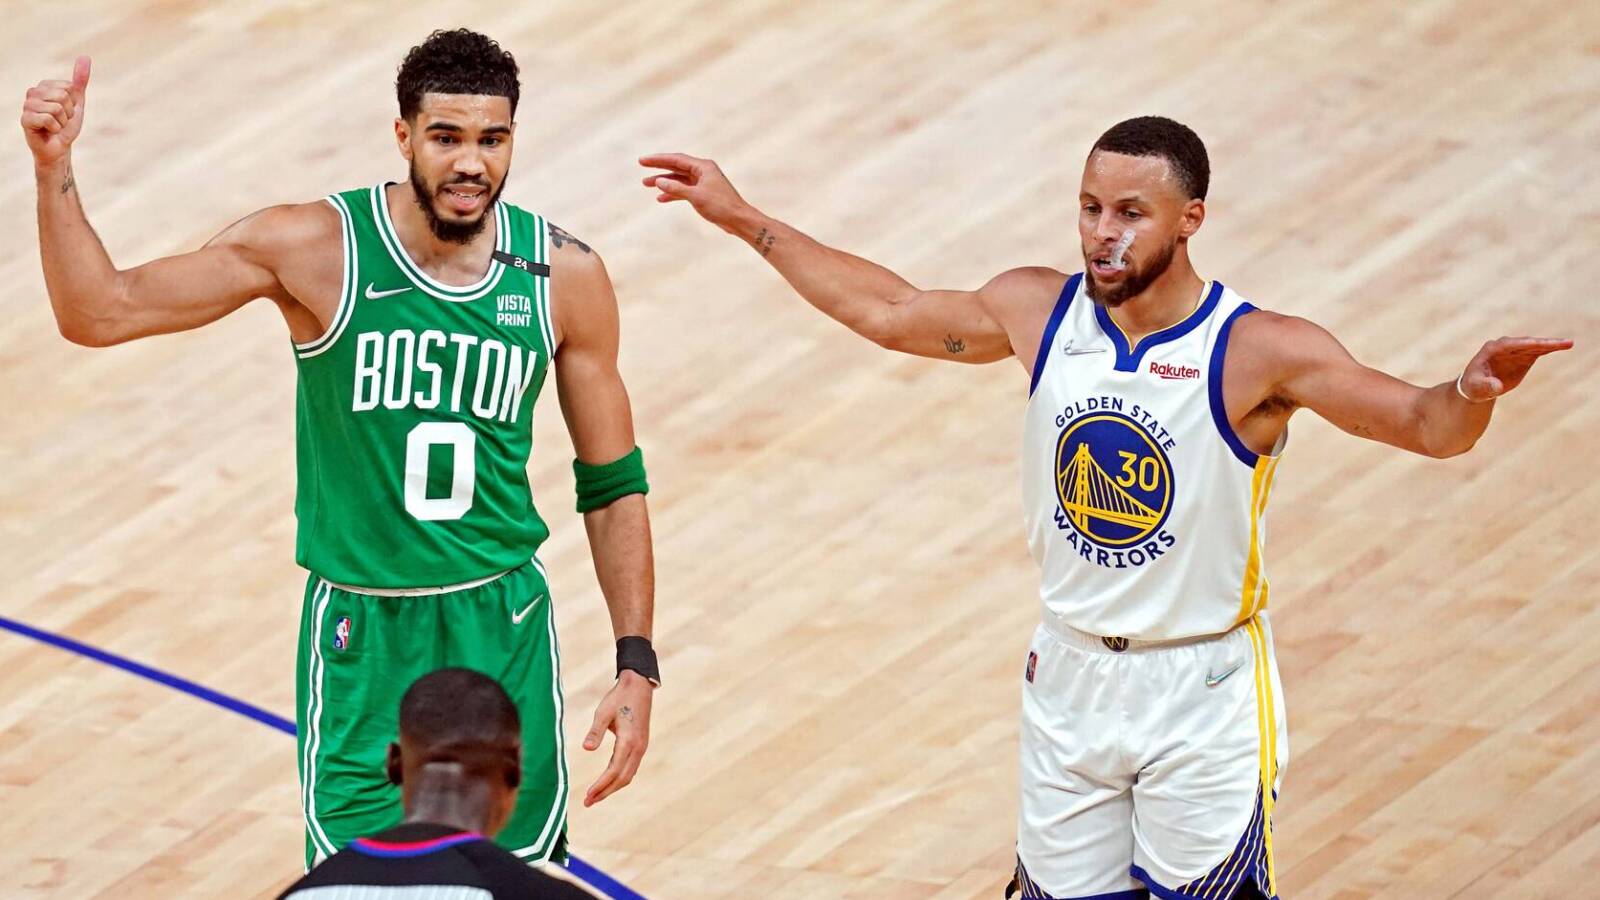 Golden State Warriors vs Boston Celtics Game 2 free live stream